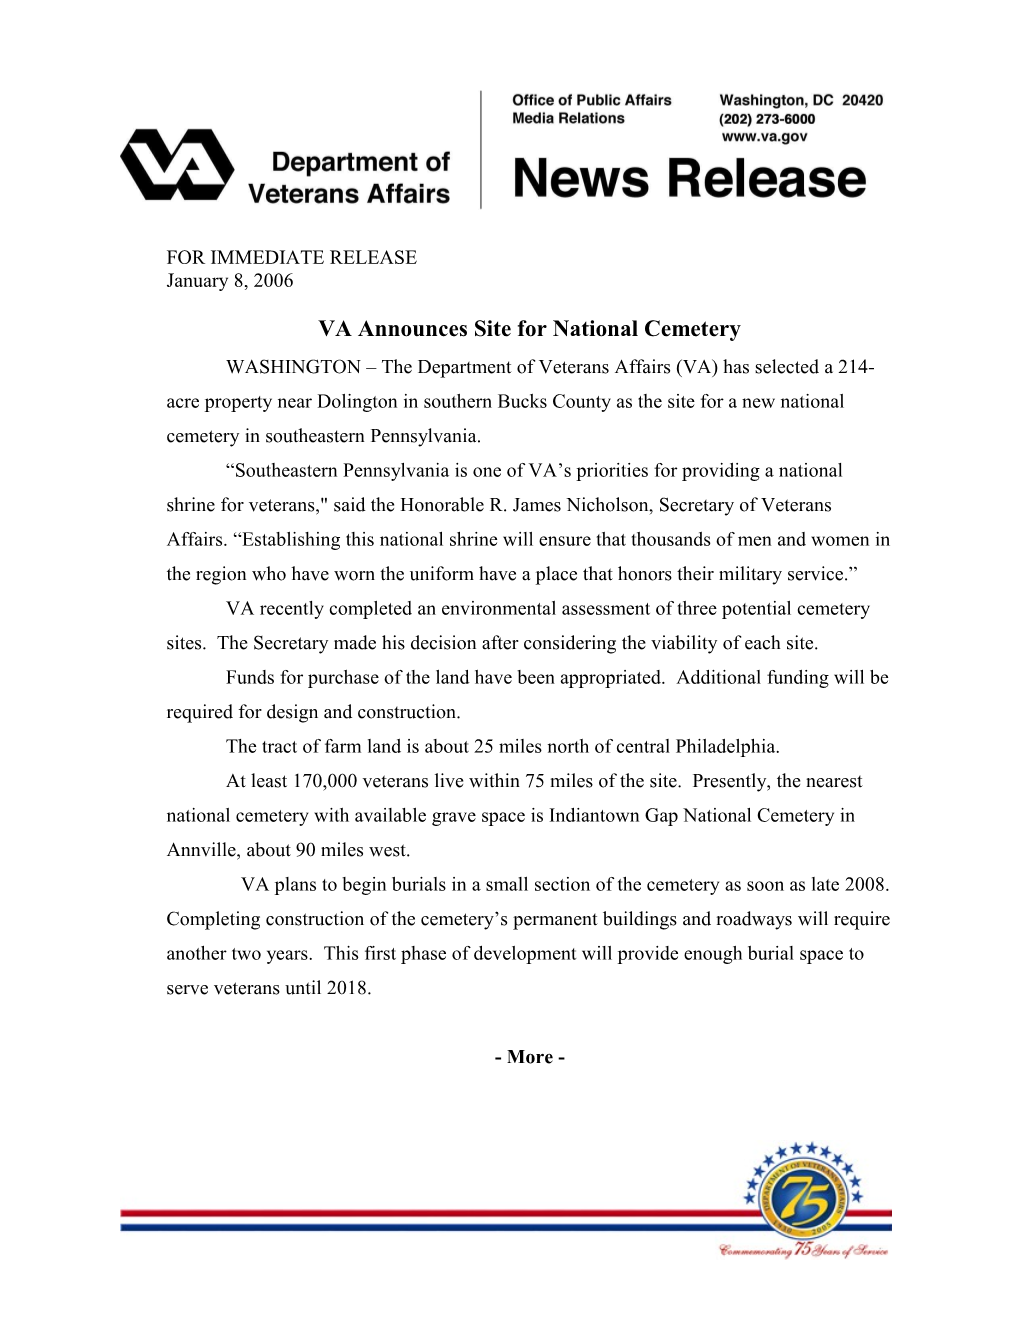 VA Announces Site for National Cemetery